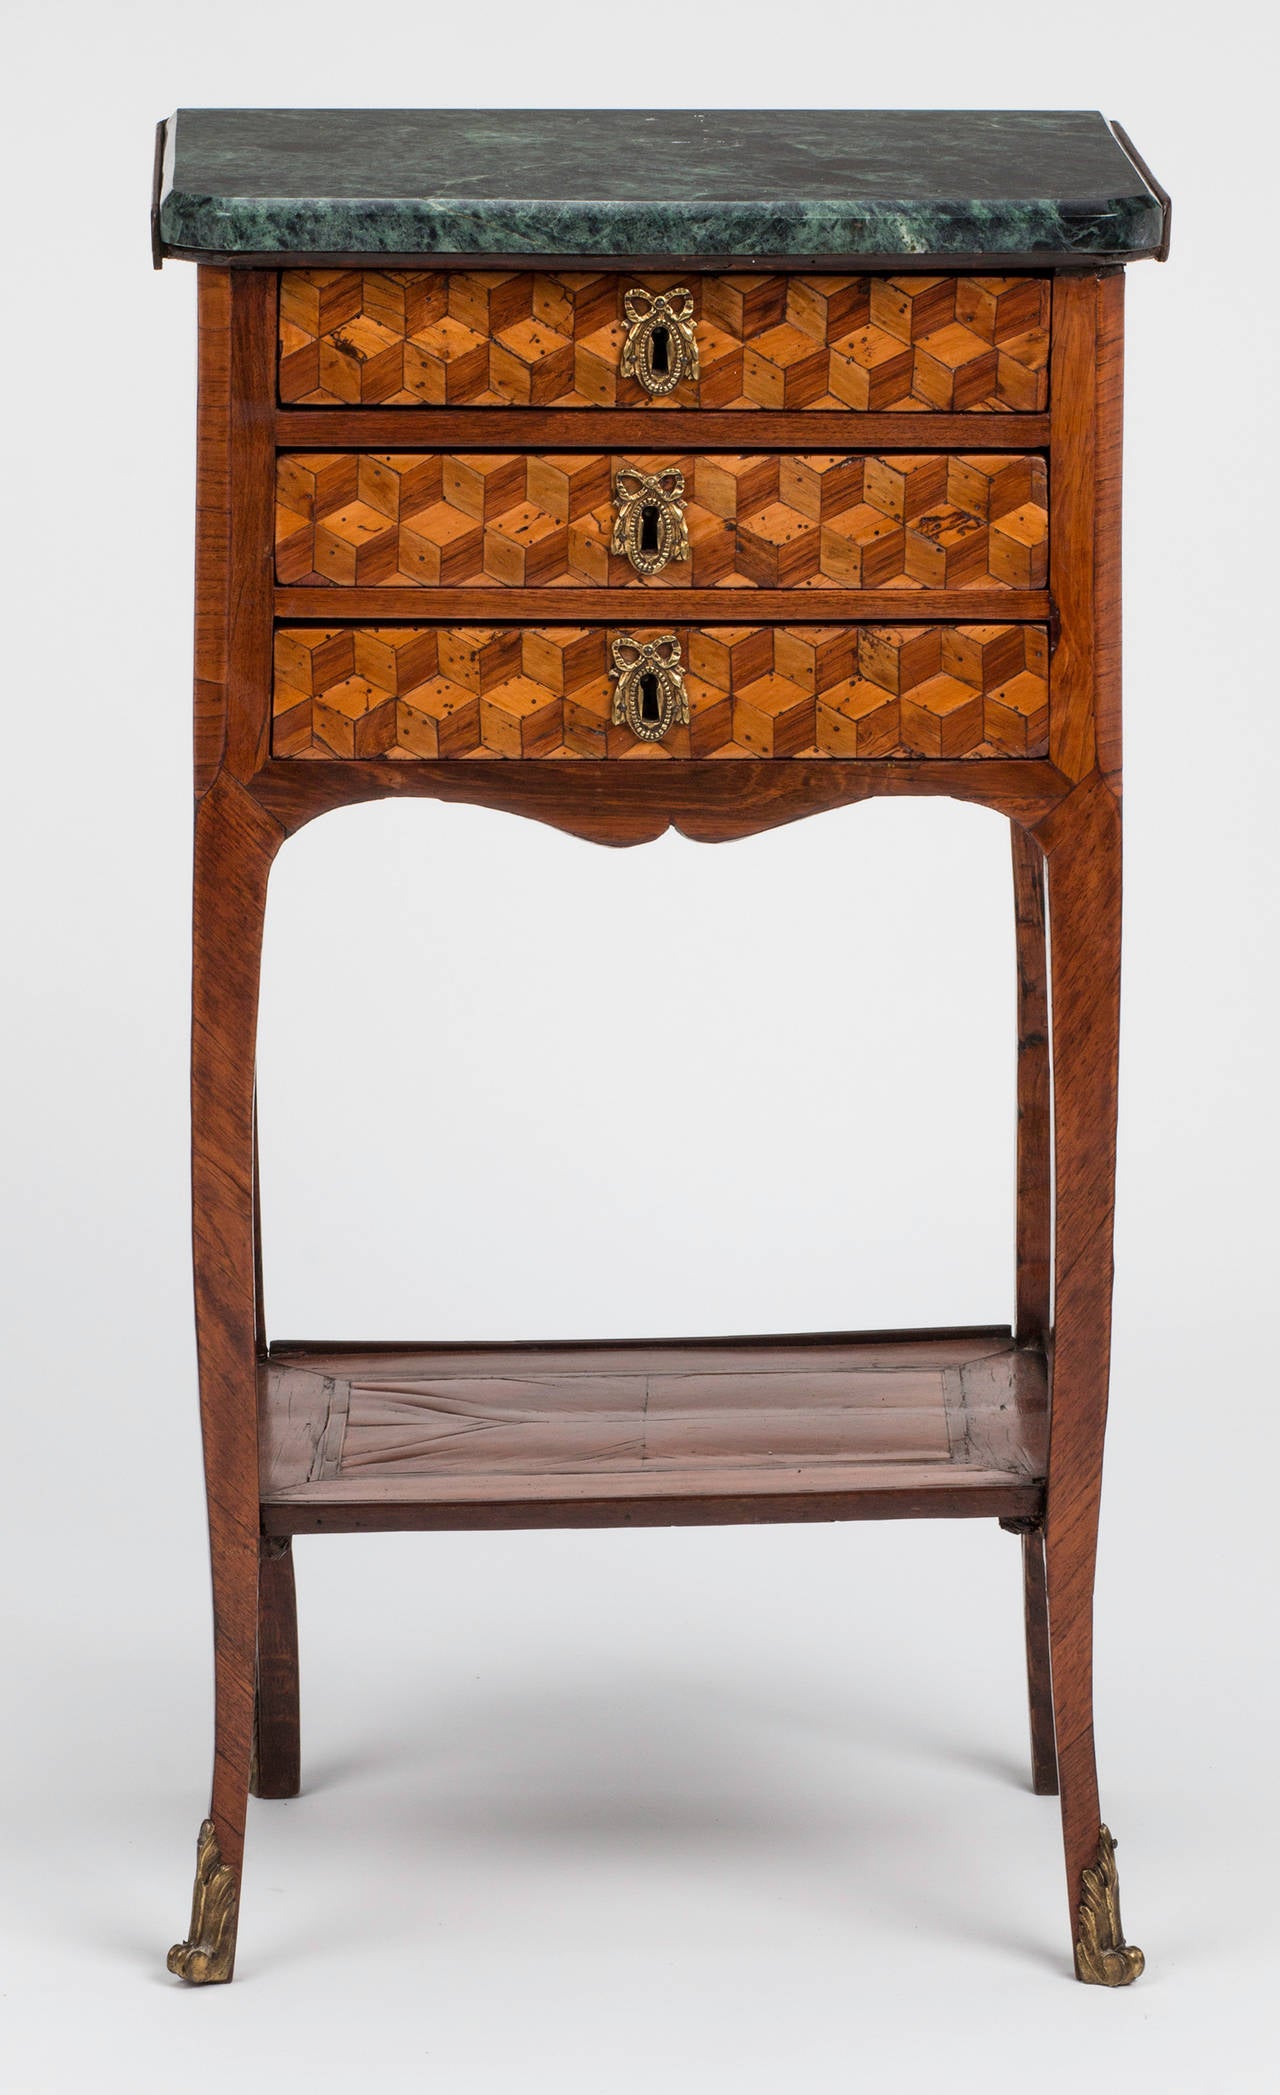 Beautiful marquetry table with three drawers. Original verdegris marble top, original bronze doré ormolu mounts and eschochons, circa 1750.